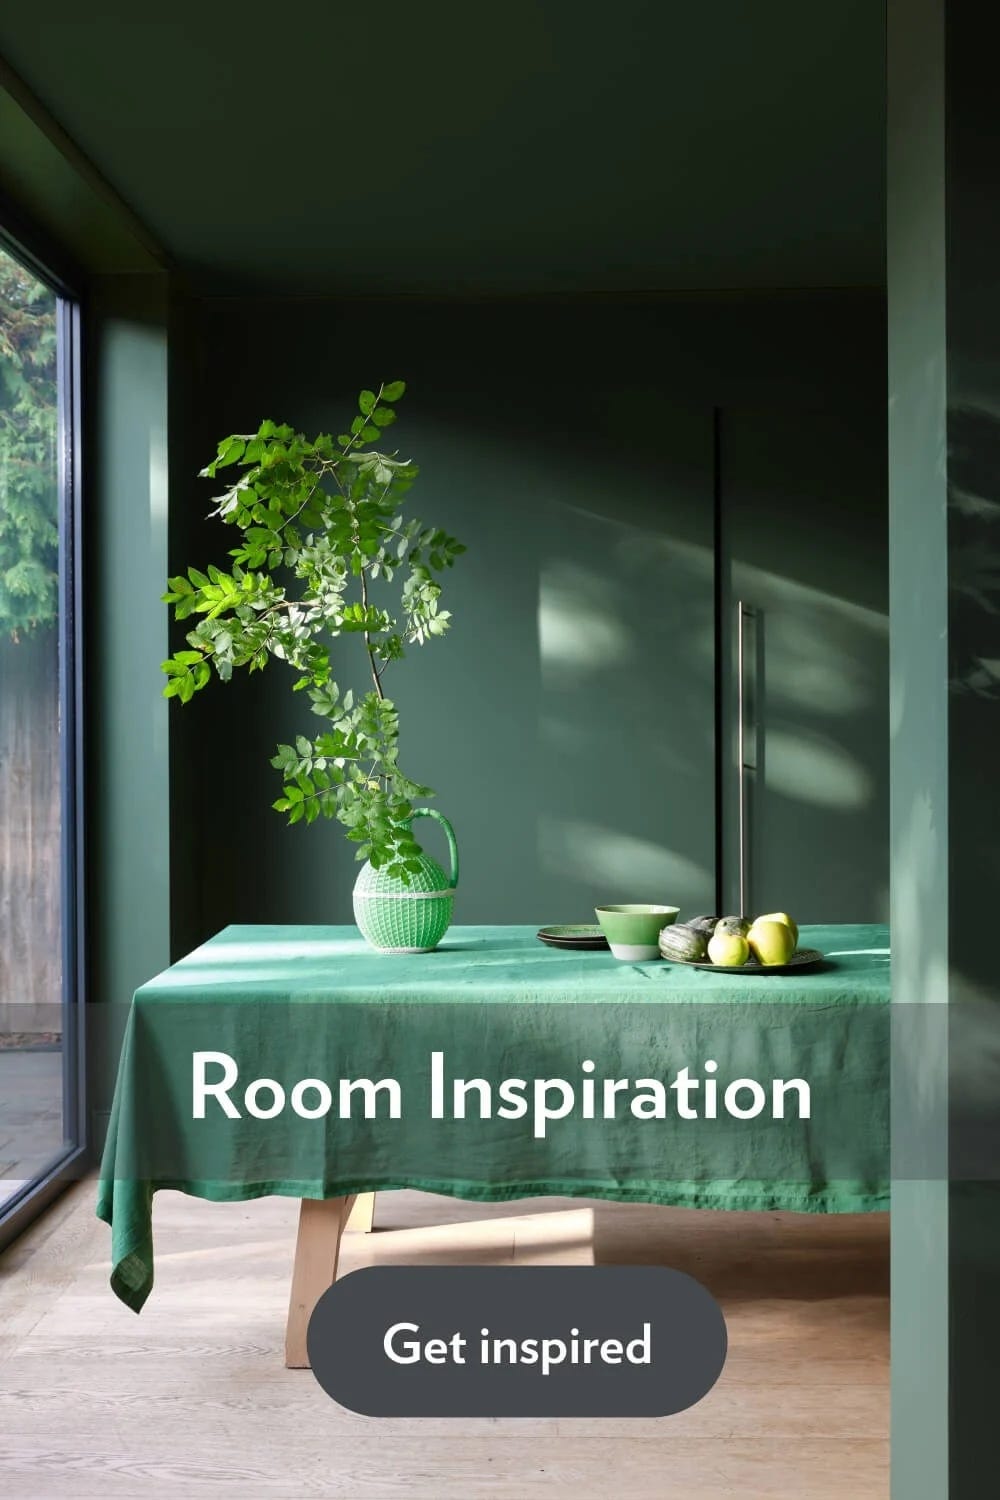 Room Inspiration